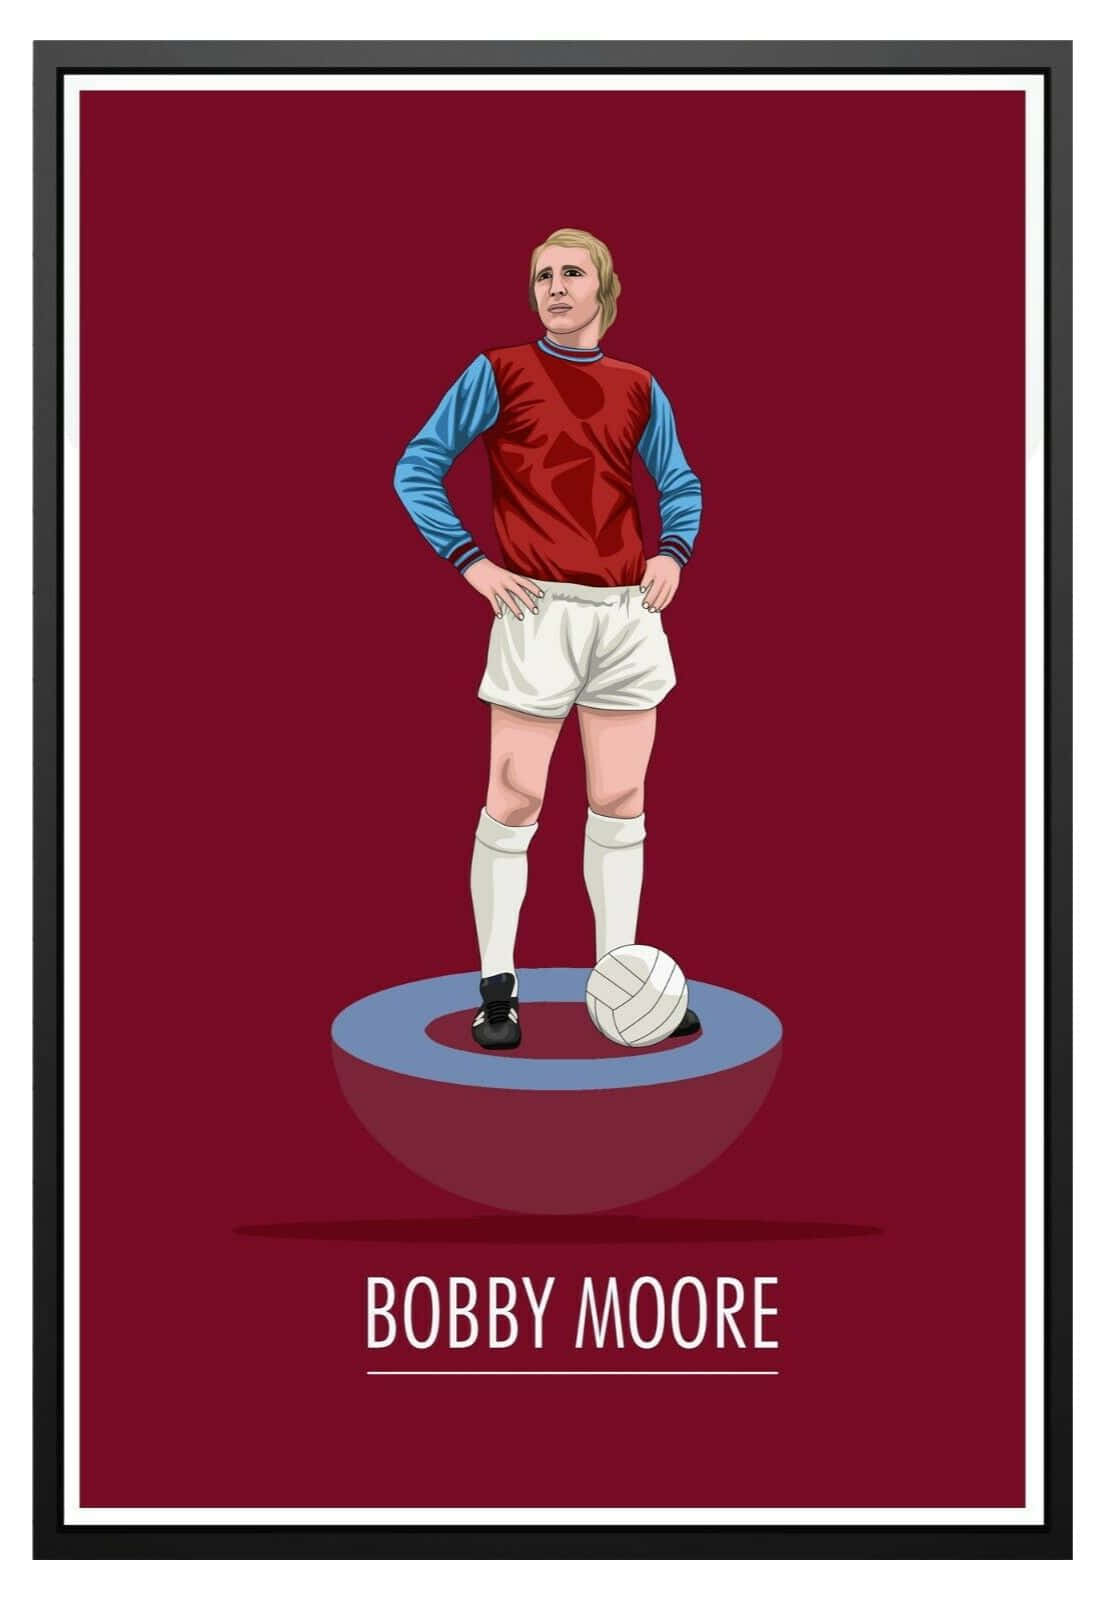 Football Athlete Bobby Moore Animated Wallpaper